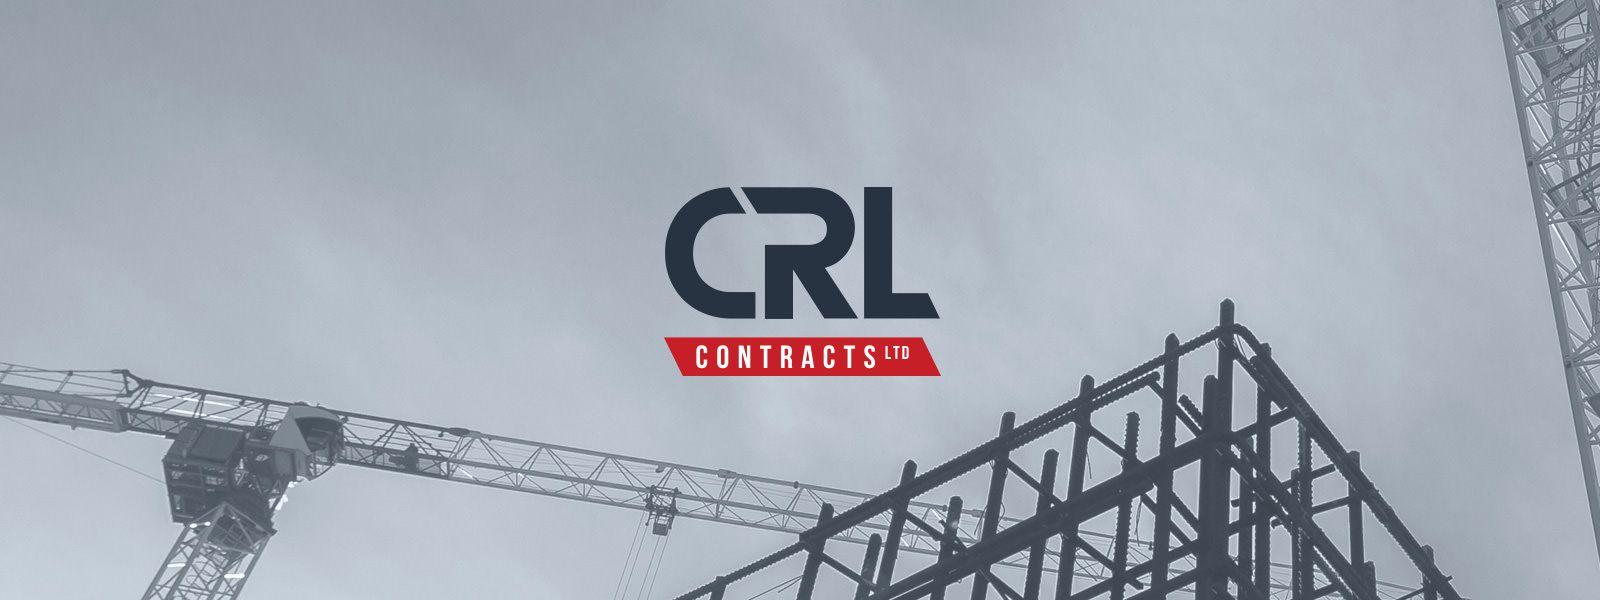 CRL Logo - Logo, Stationery & Website Design - CRL Contracts Ltd